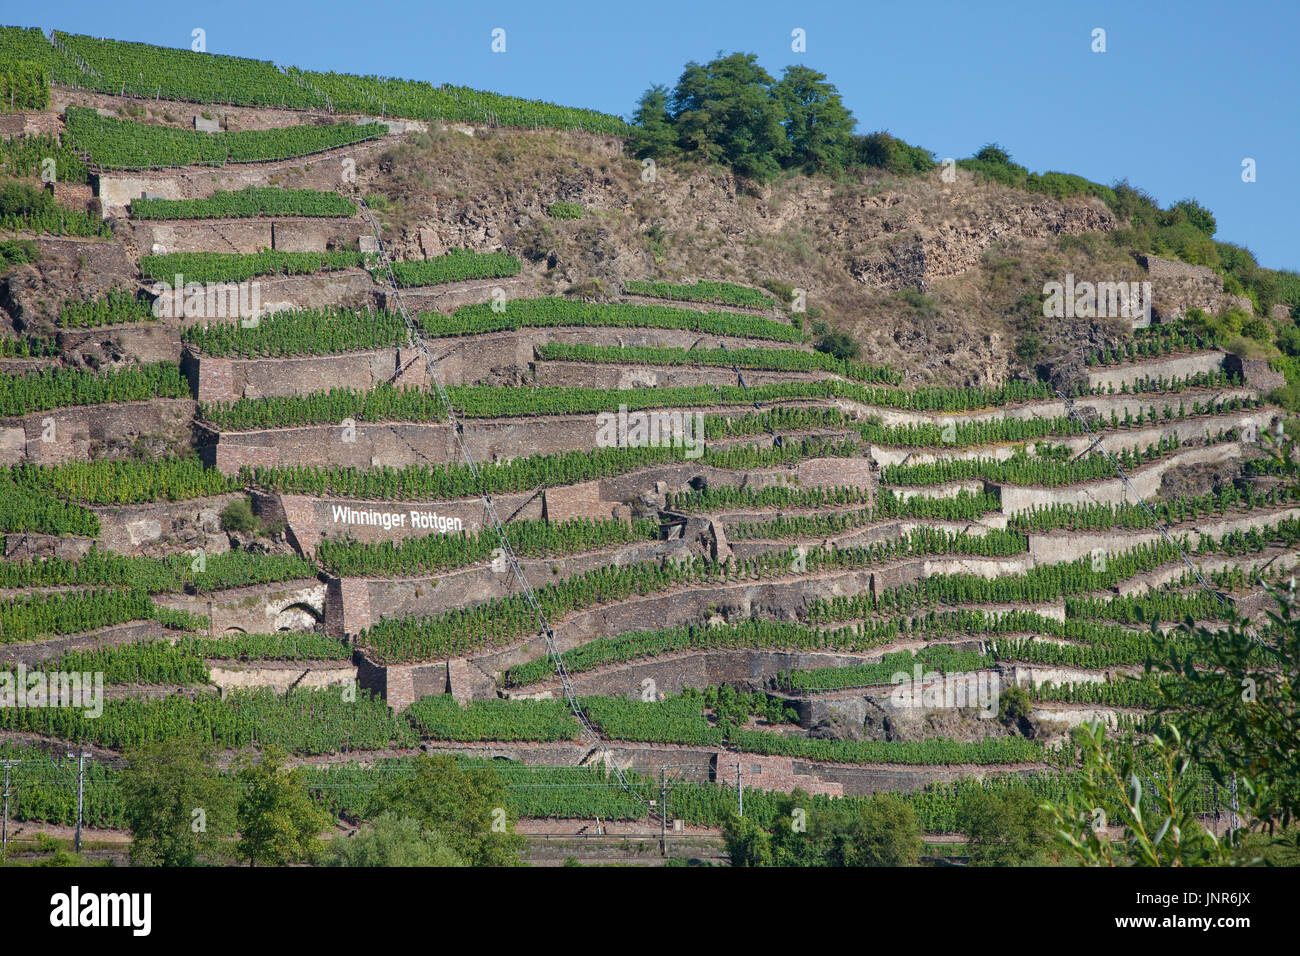 Terrassenmosel, Untermosel, Landkreis Mayen-Koblenz Renania-Palatinato, Deutschland, Europa | vino terrazza, sul fiume Mosella, Germania Foto Stock